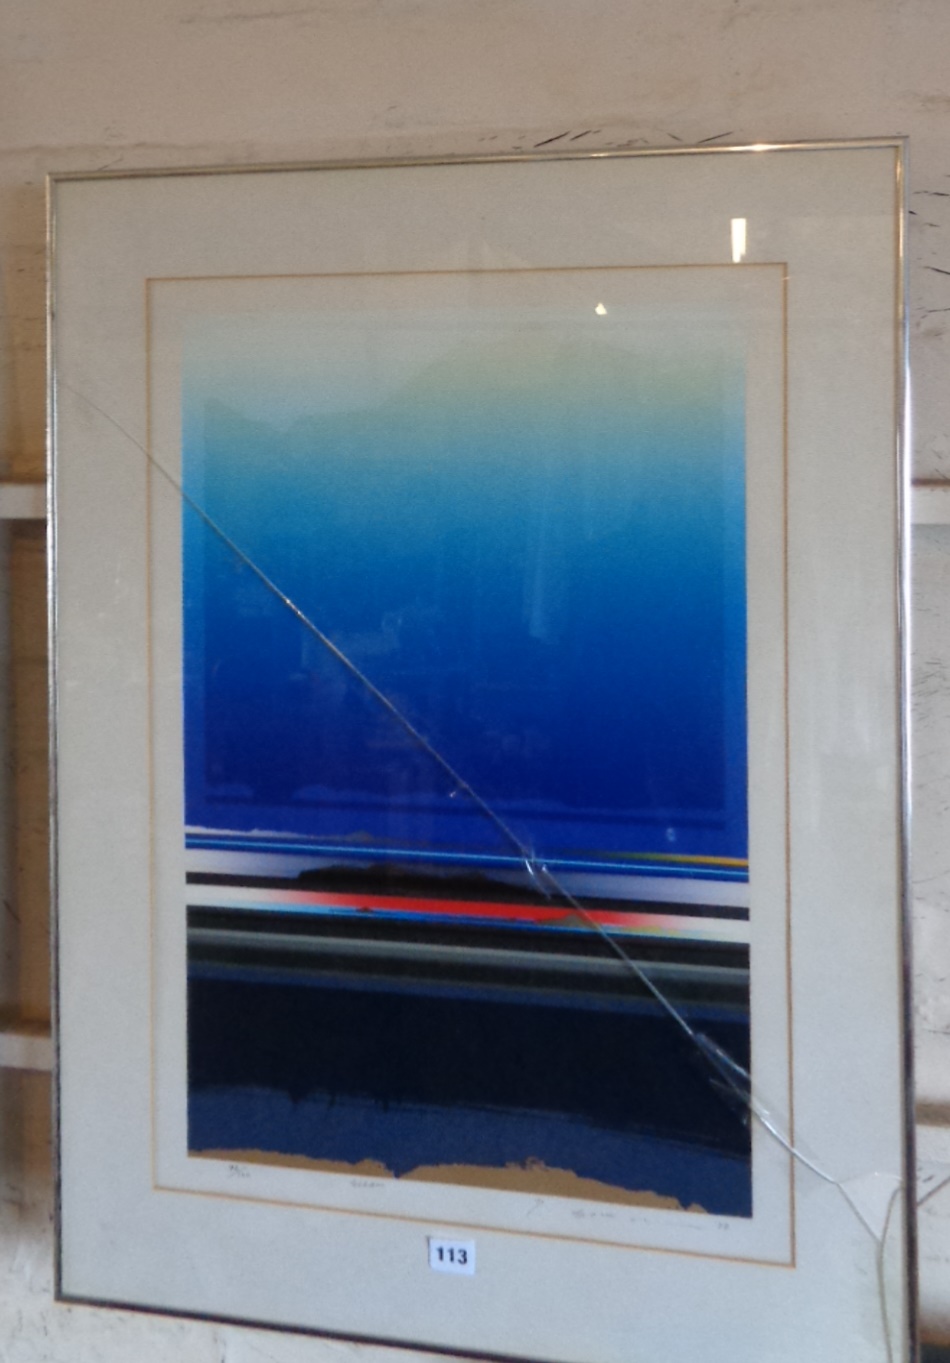 Tetsuro SAWADA (1933-1998) silkscreen abstract print titled "Gleam", 32" x 24", inc. contemporary